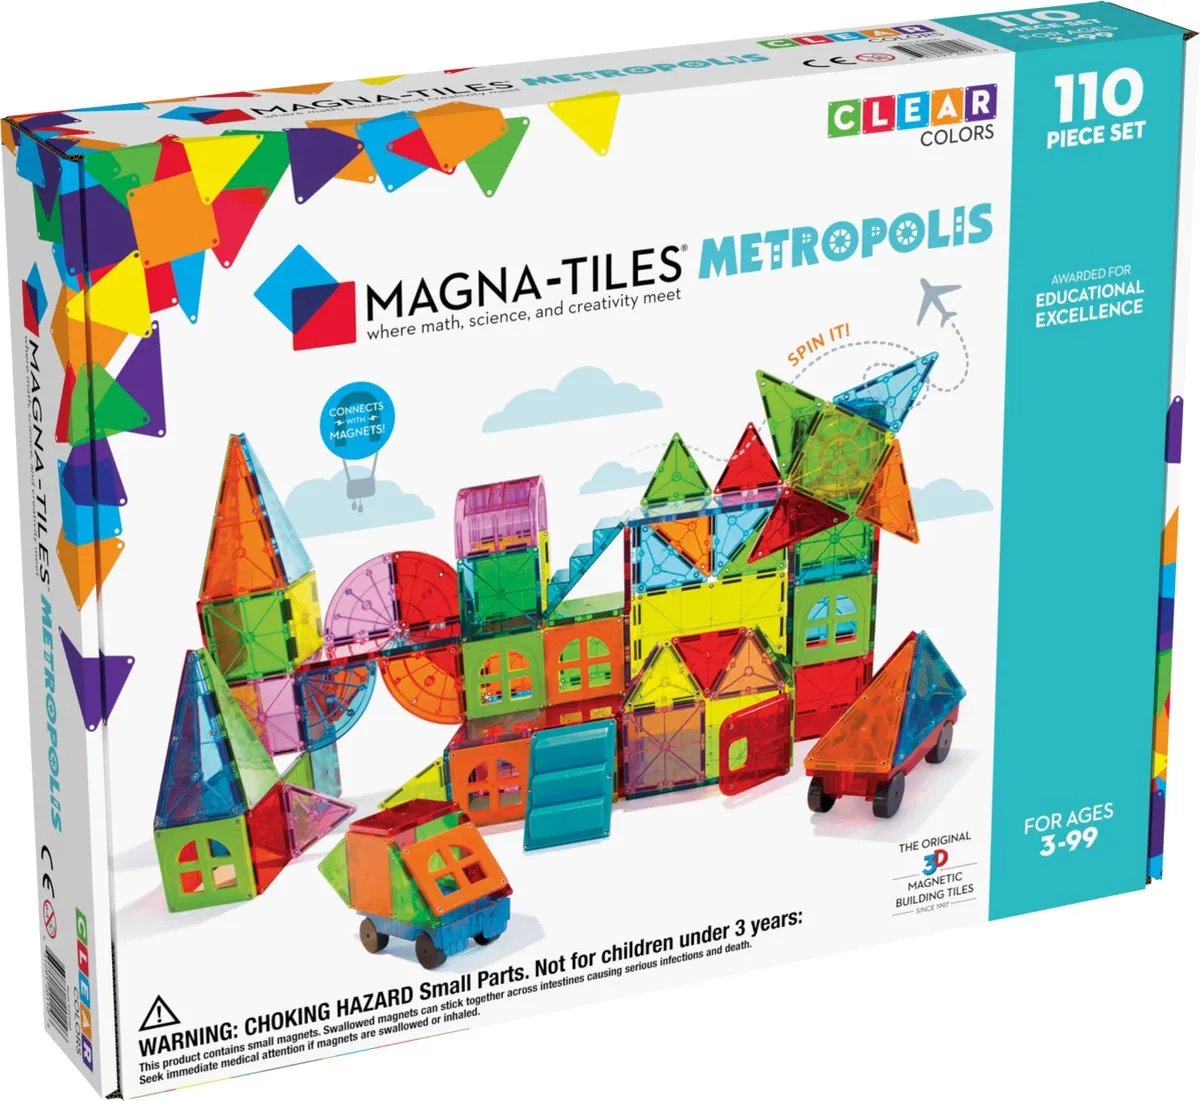 Valtech Magna-Tiles Metropolis speelgoed